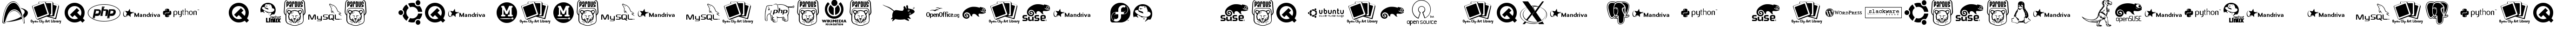 Пример написания шрифтом OpenLogos текста на испанском